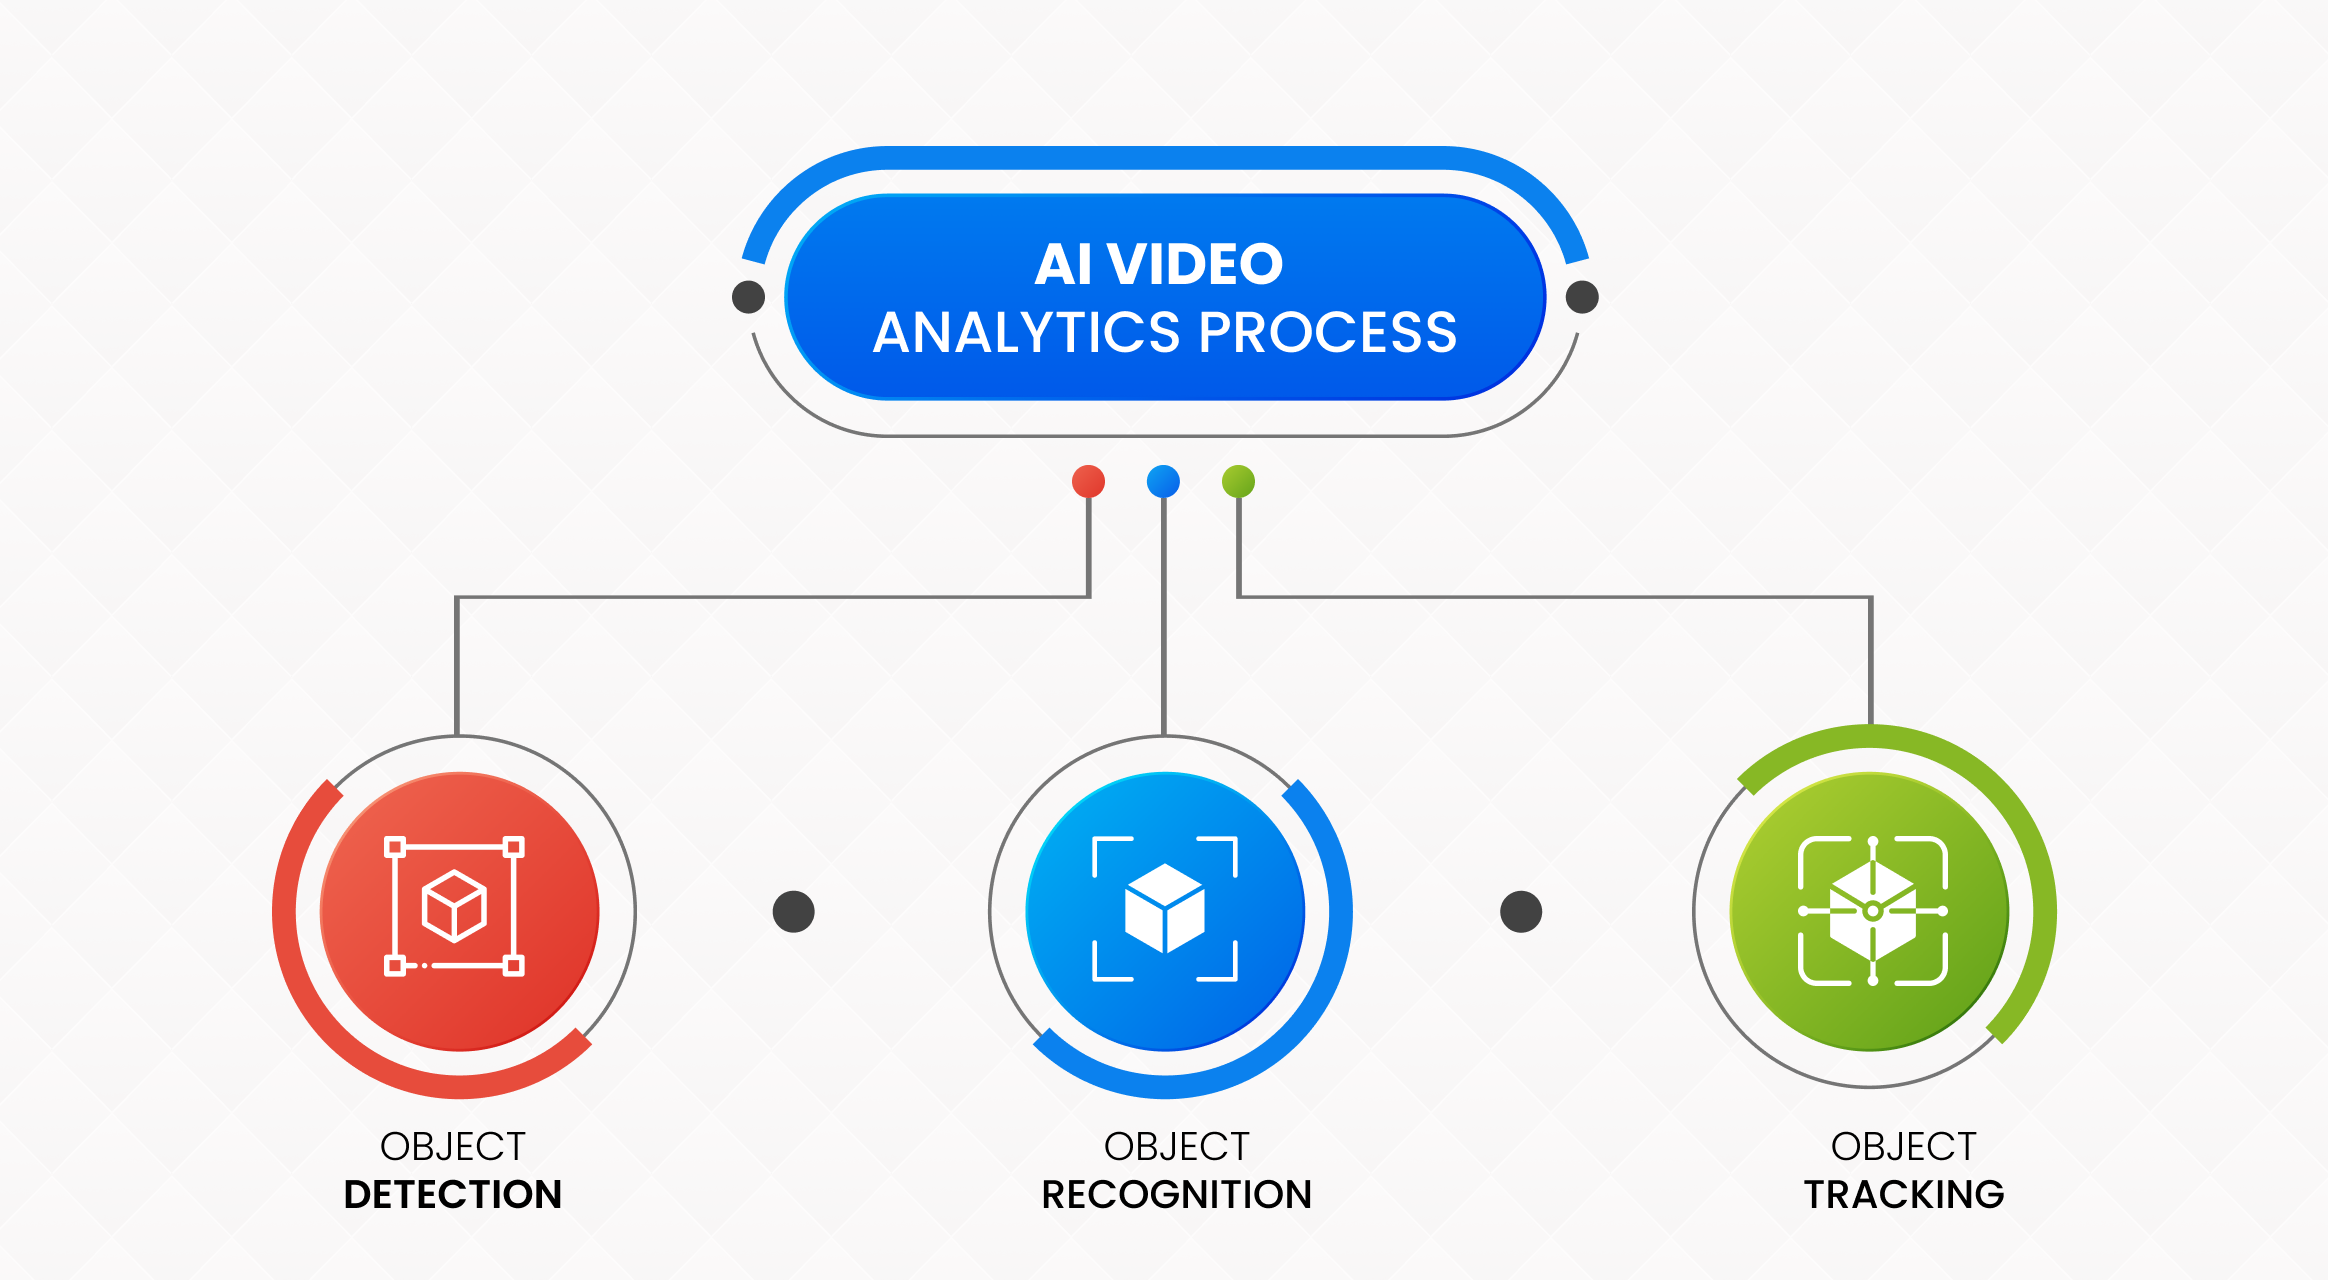 AI Video Analytics processing involves three key tasks